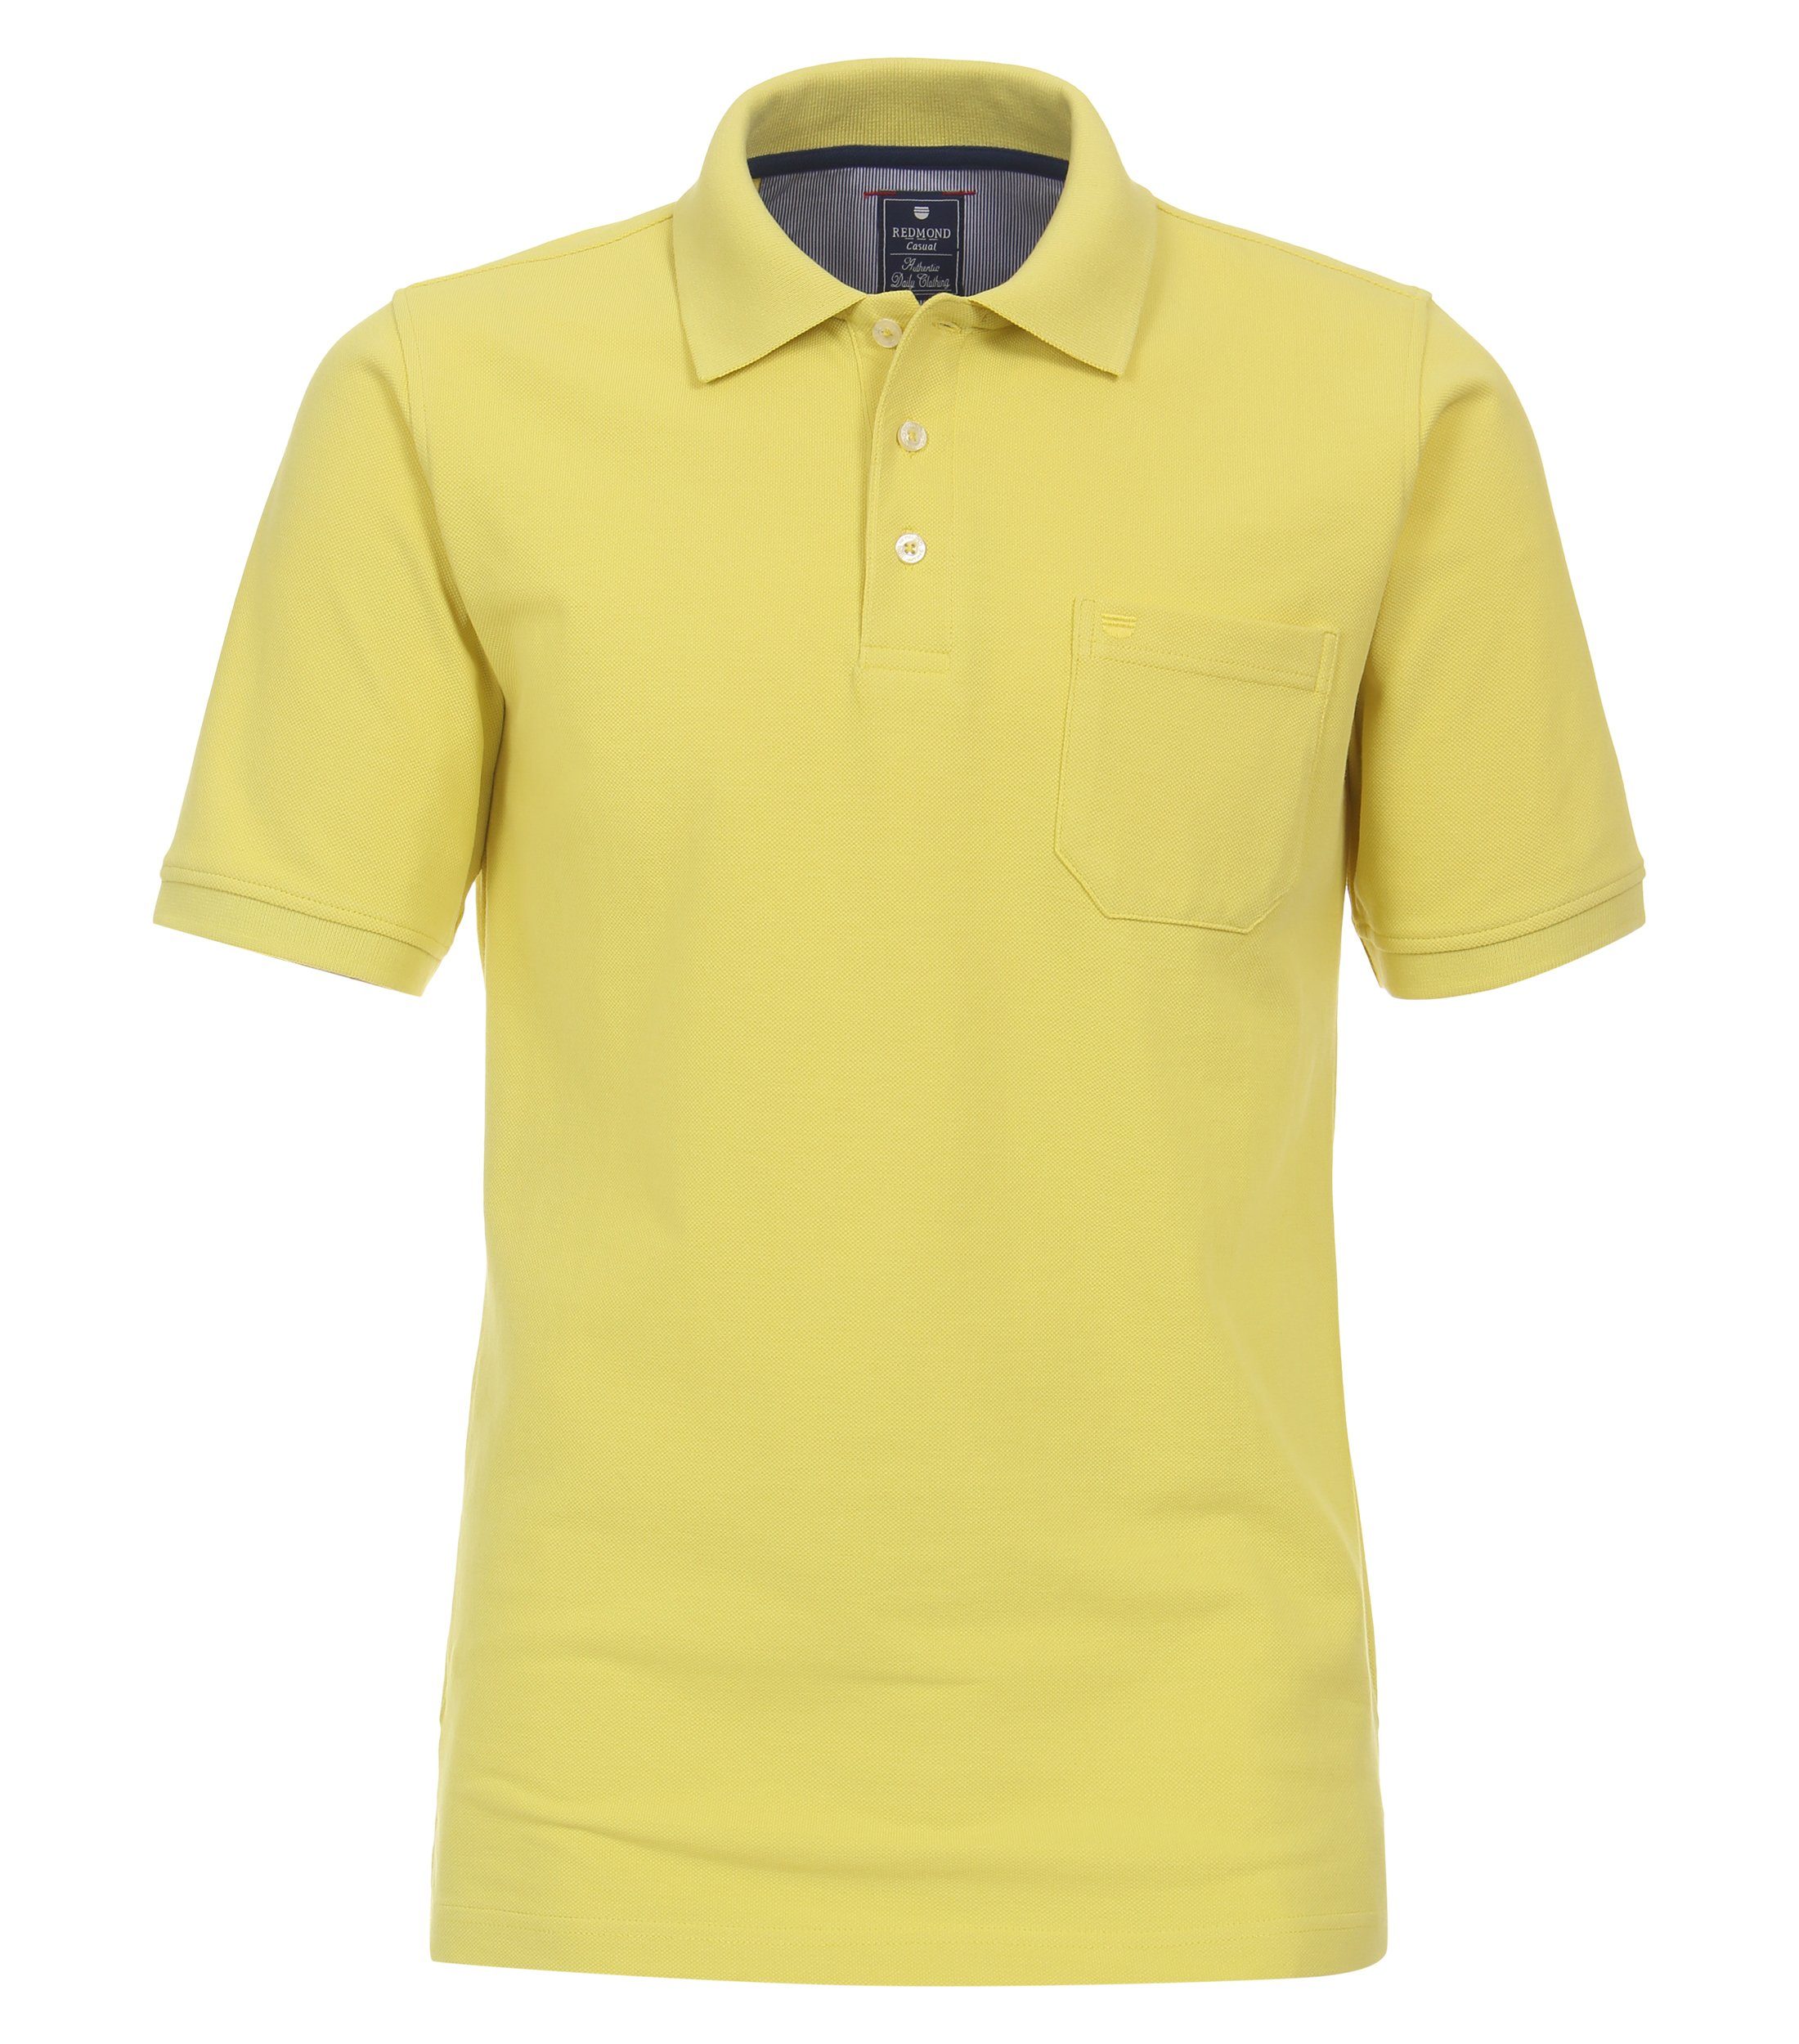 Redmond Poloshirt uni 44 gelb